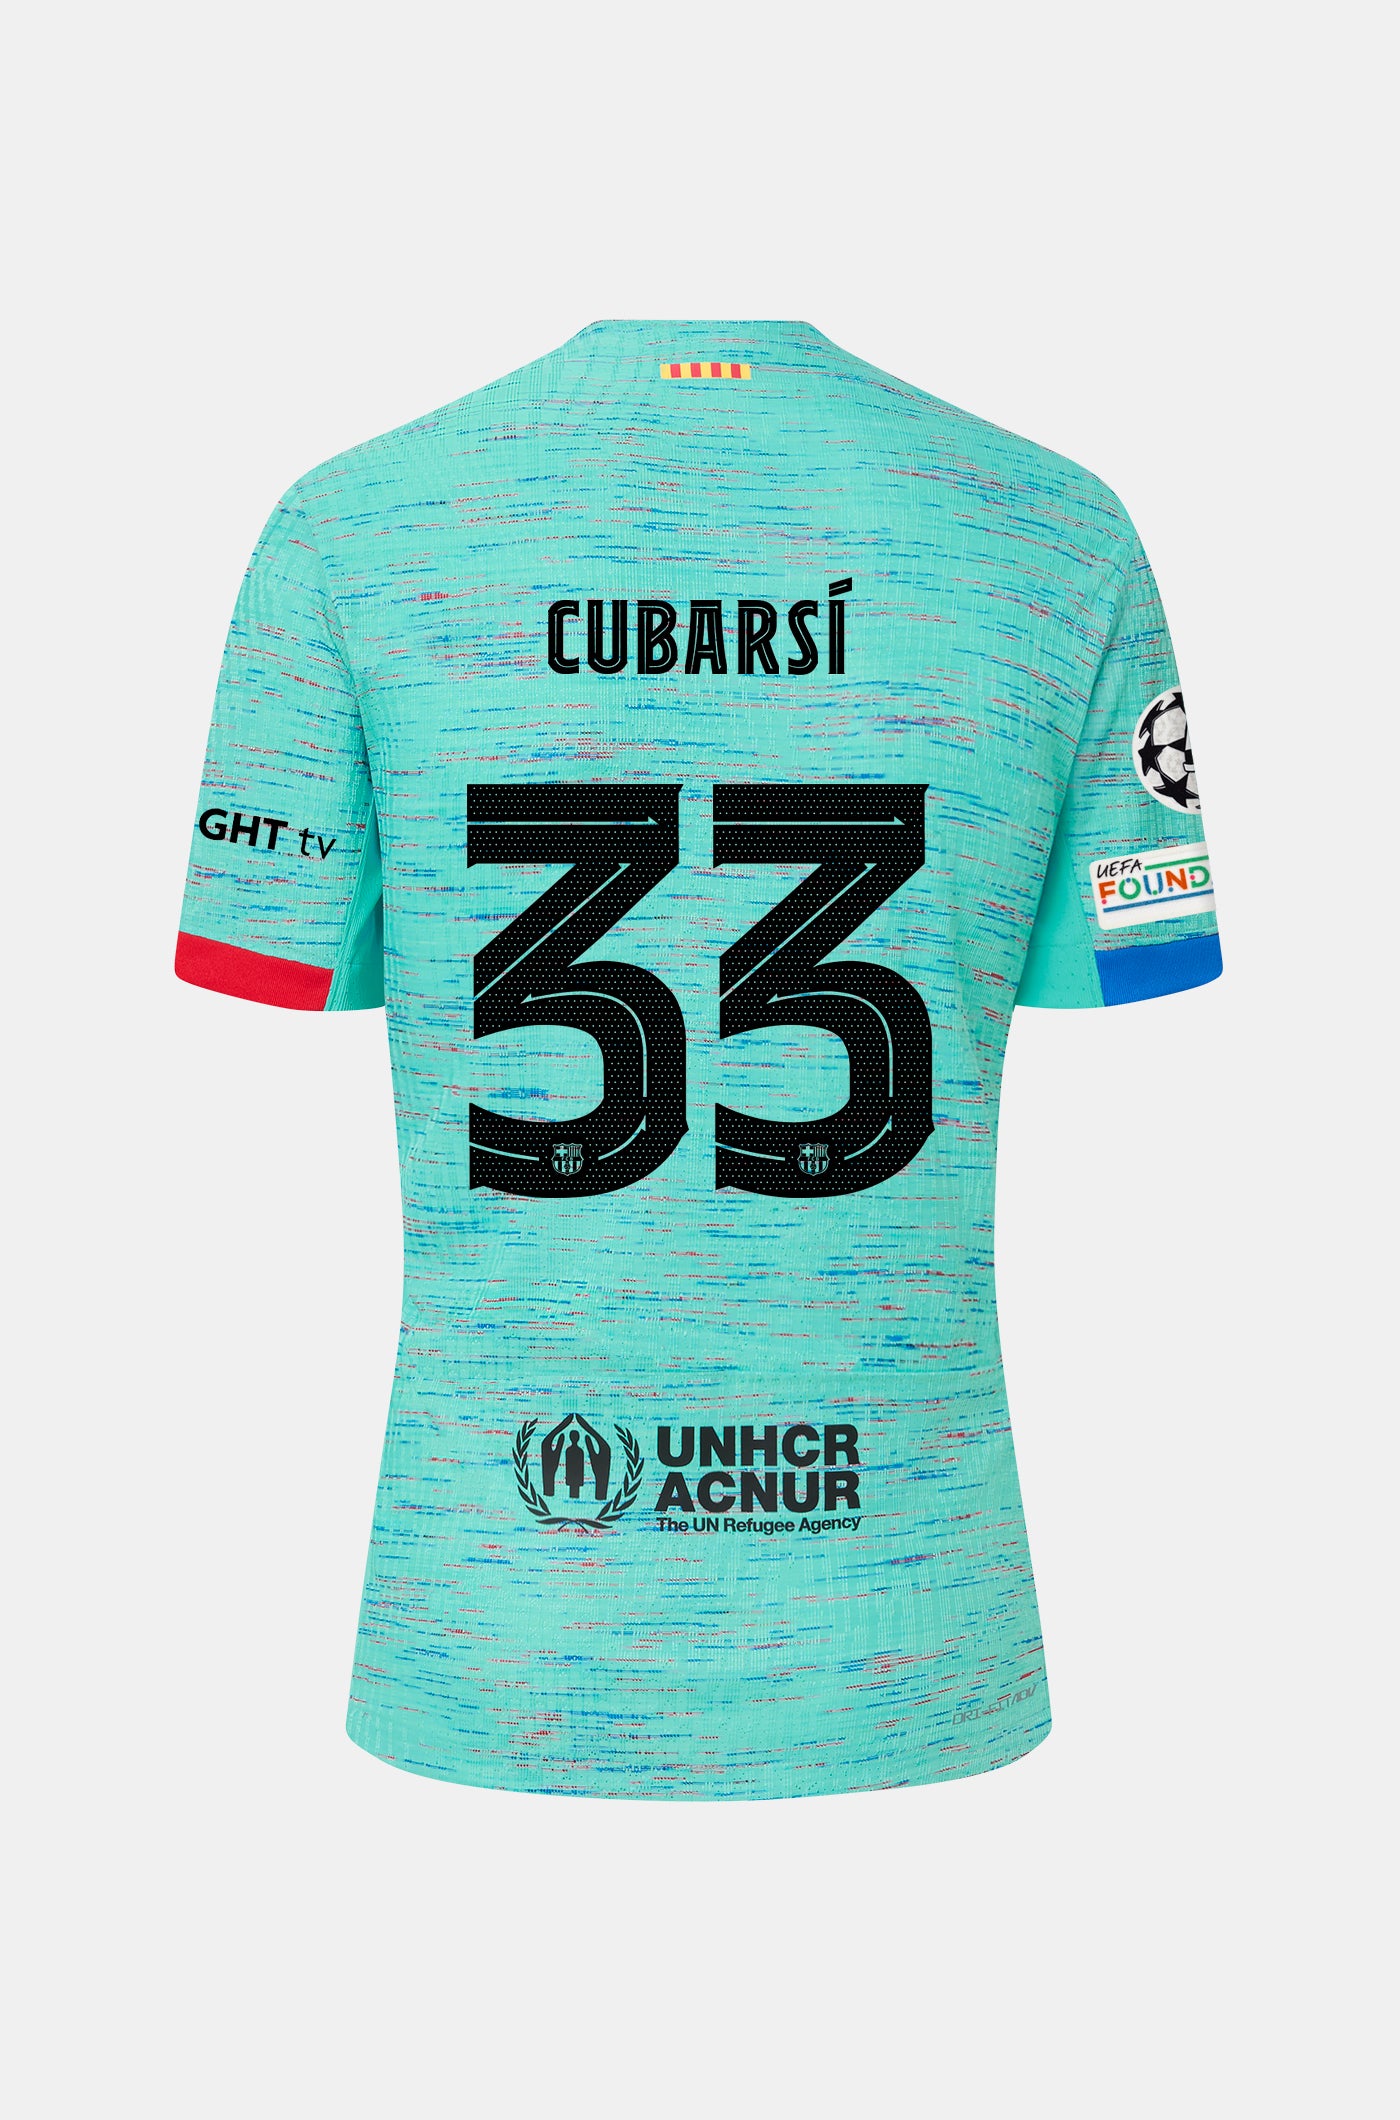 UCL FC Barcelona third shirt 23/24 Player’s Edition - CUBARSÍ